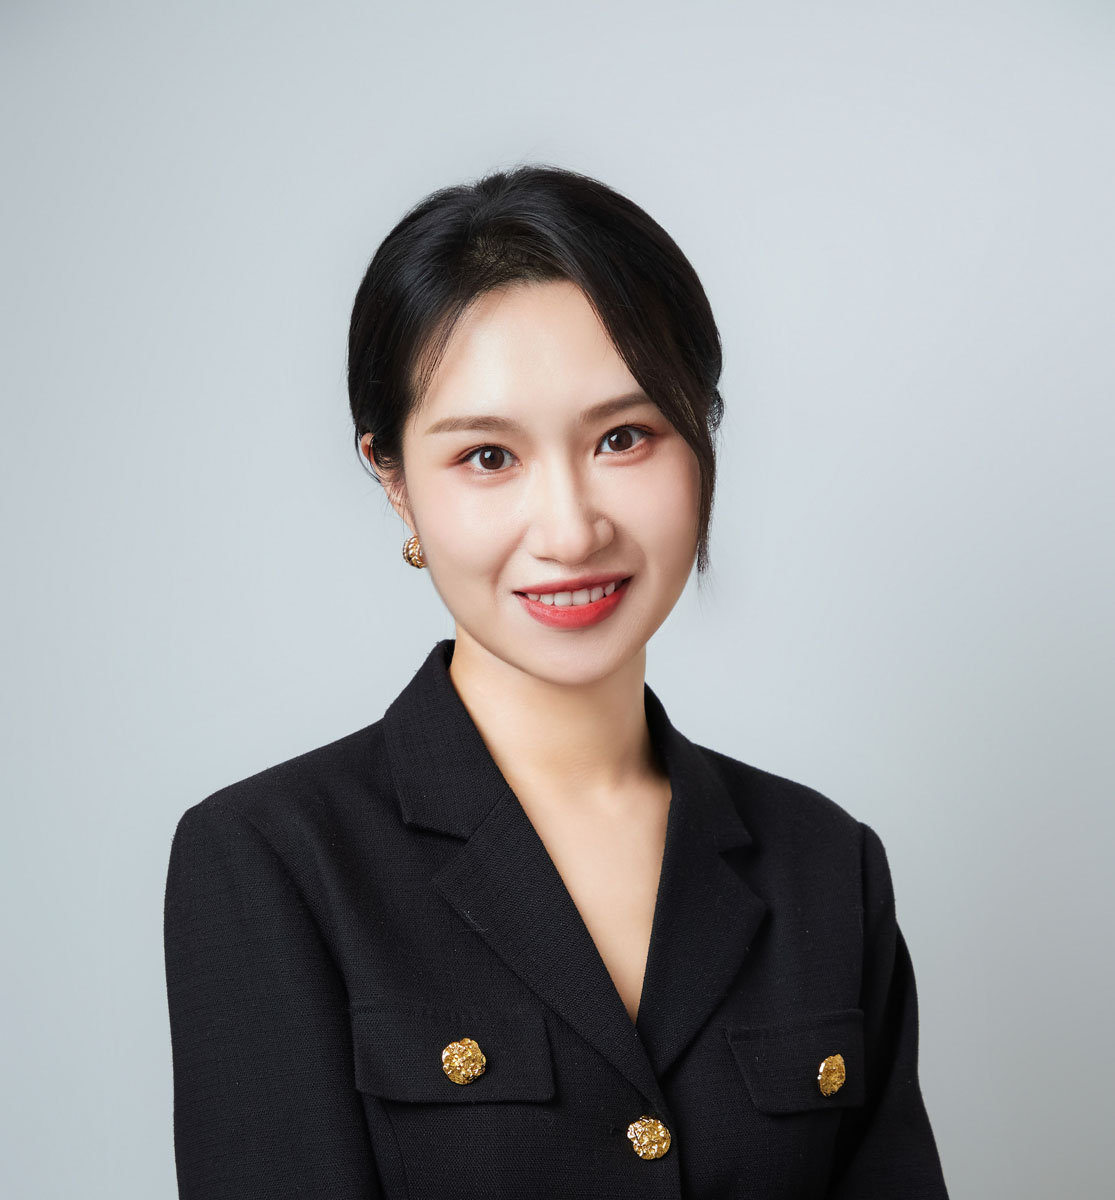 Carol Yan, Business Development Manager, China at Golden Gate Global